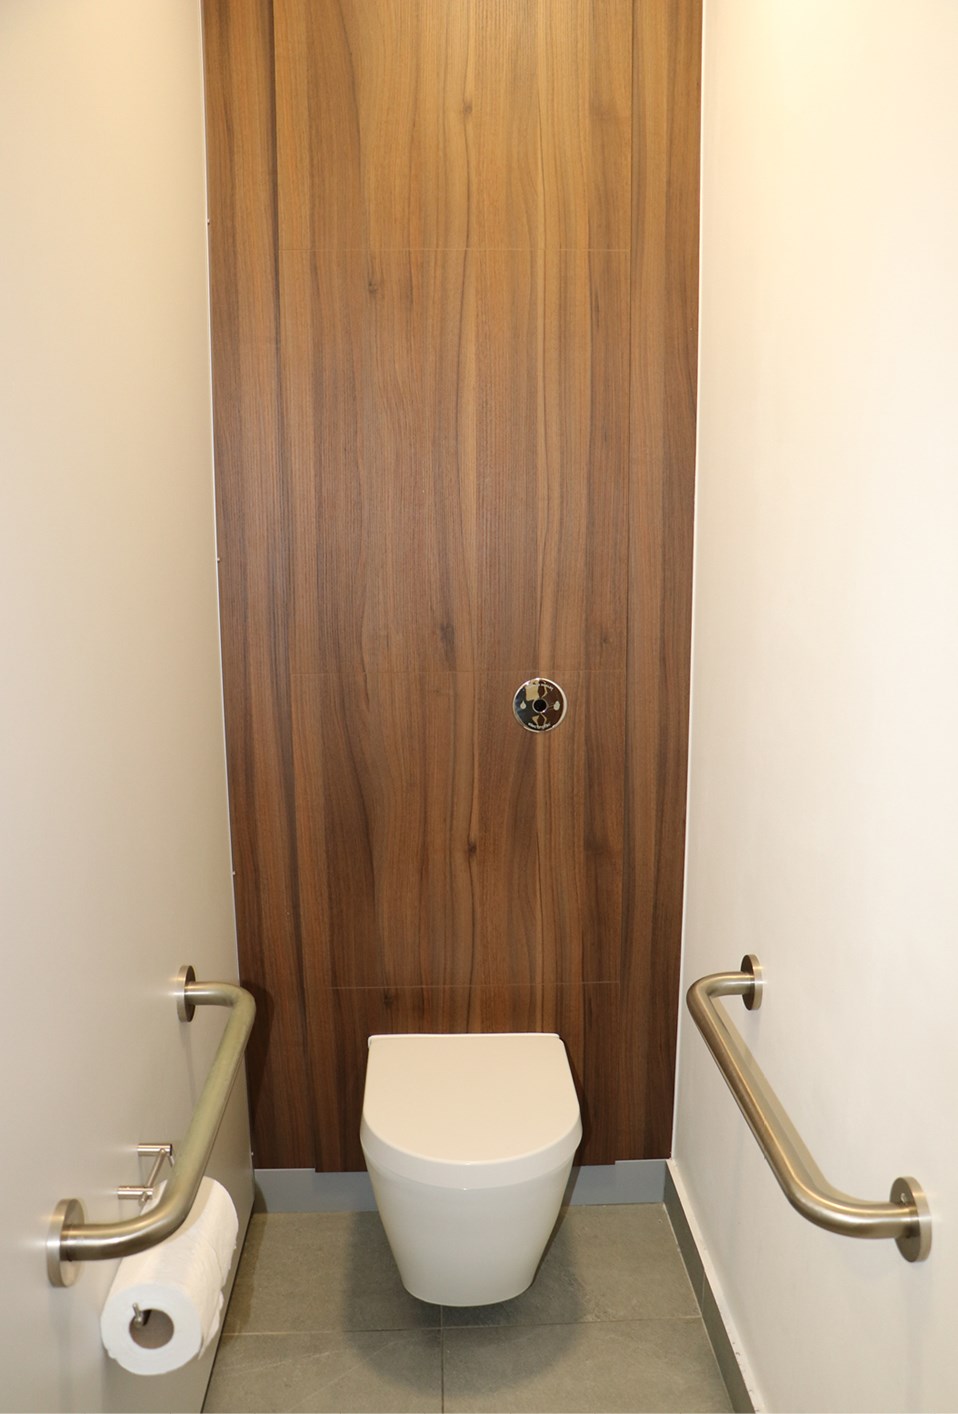 Venesta Washrooms Toilet Cubicles Ips Vepps Office Washroom Renovation9